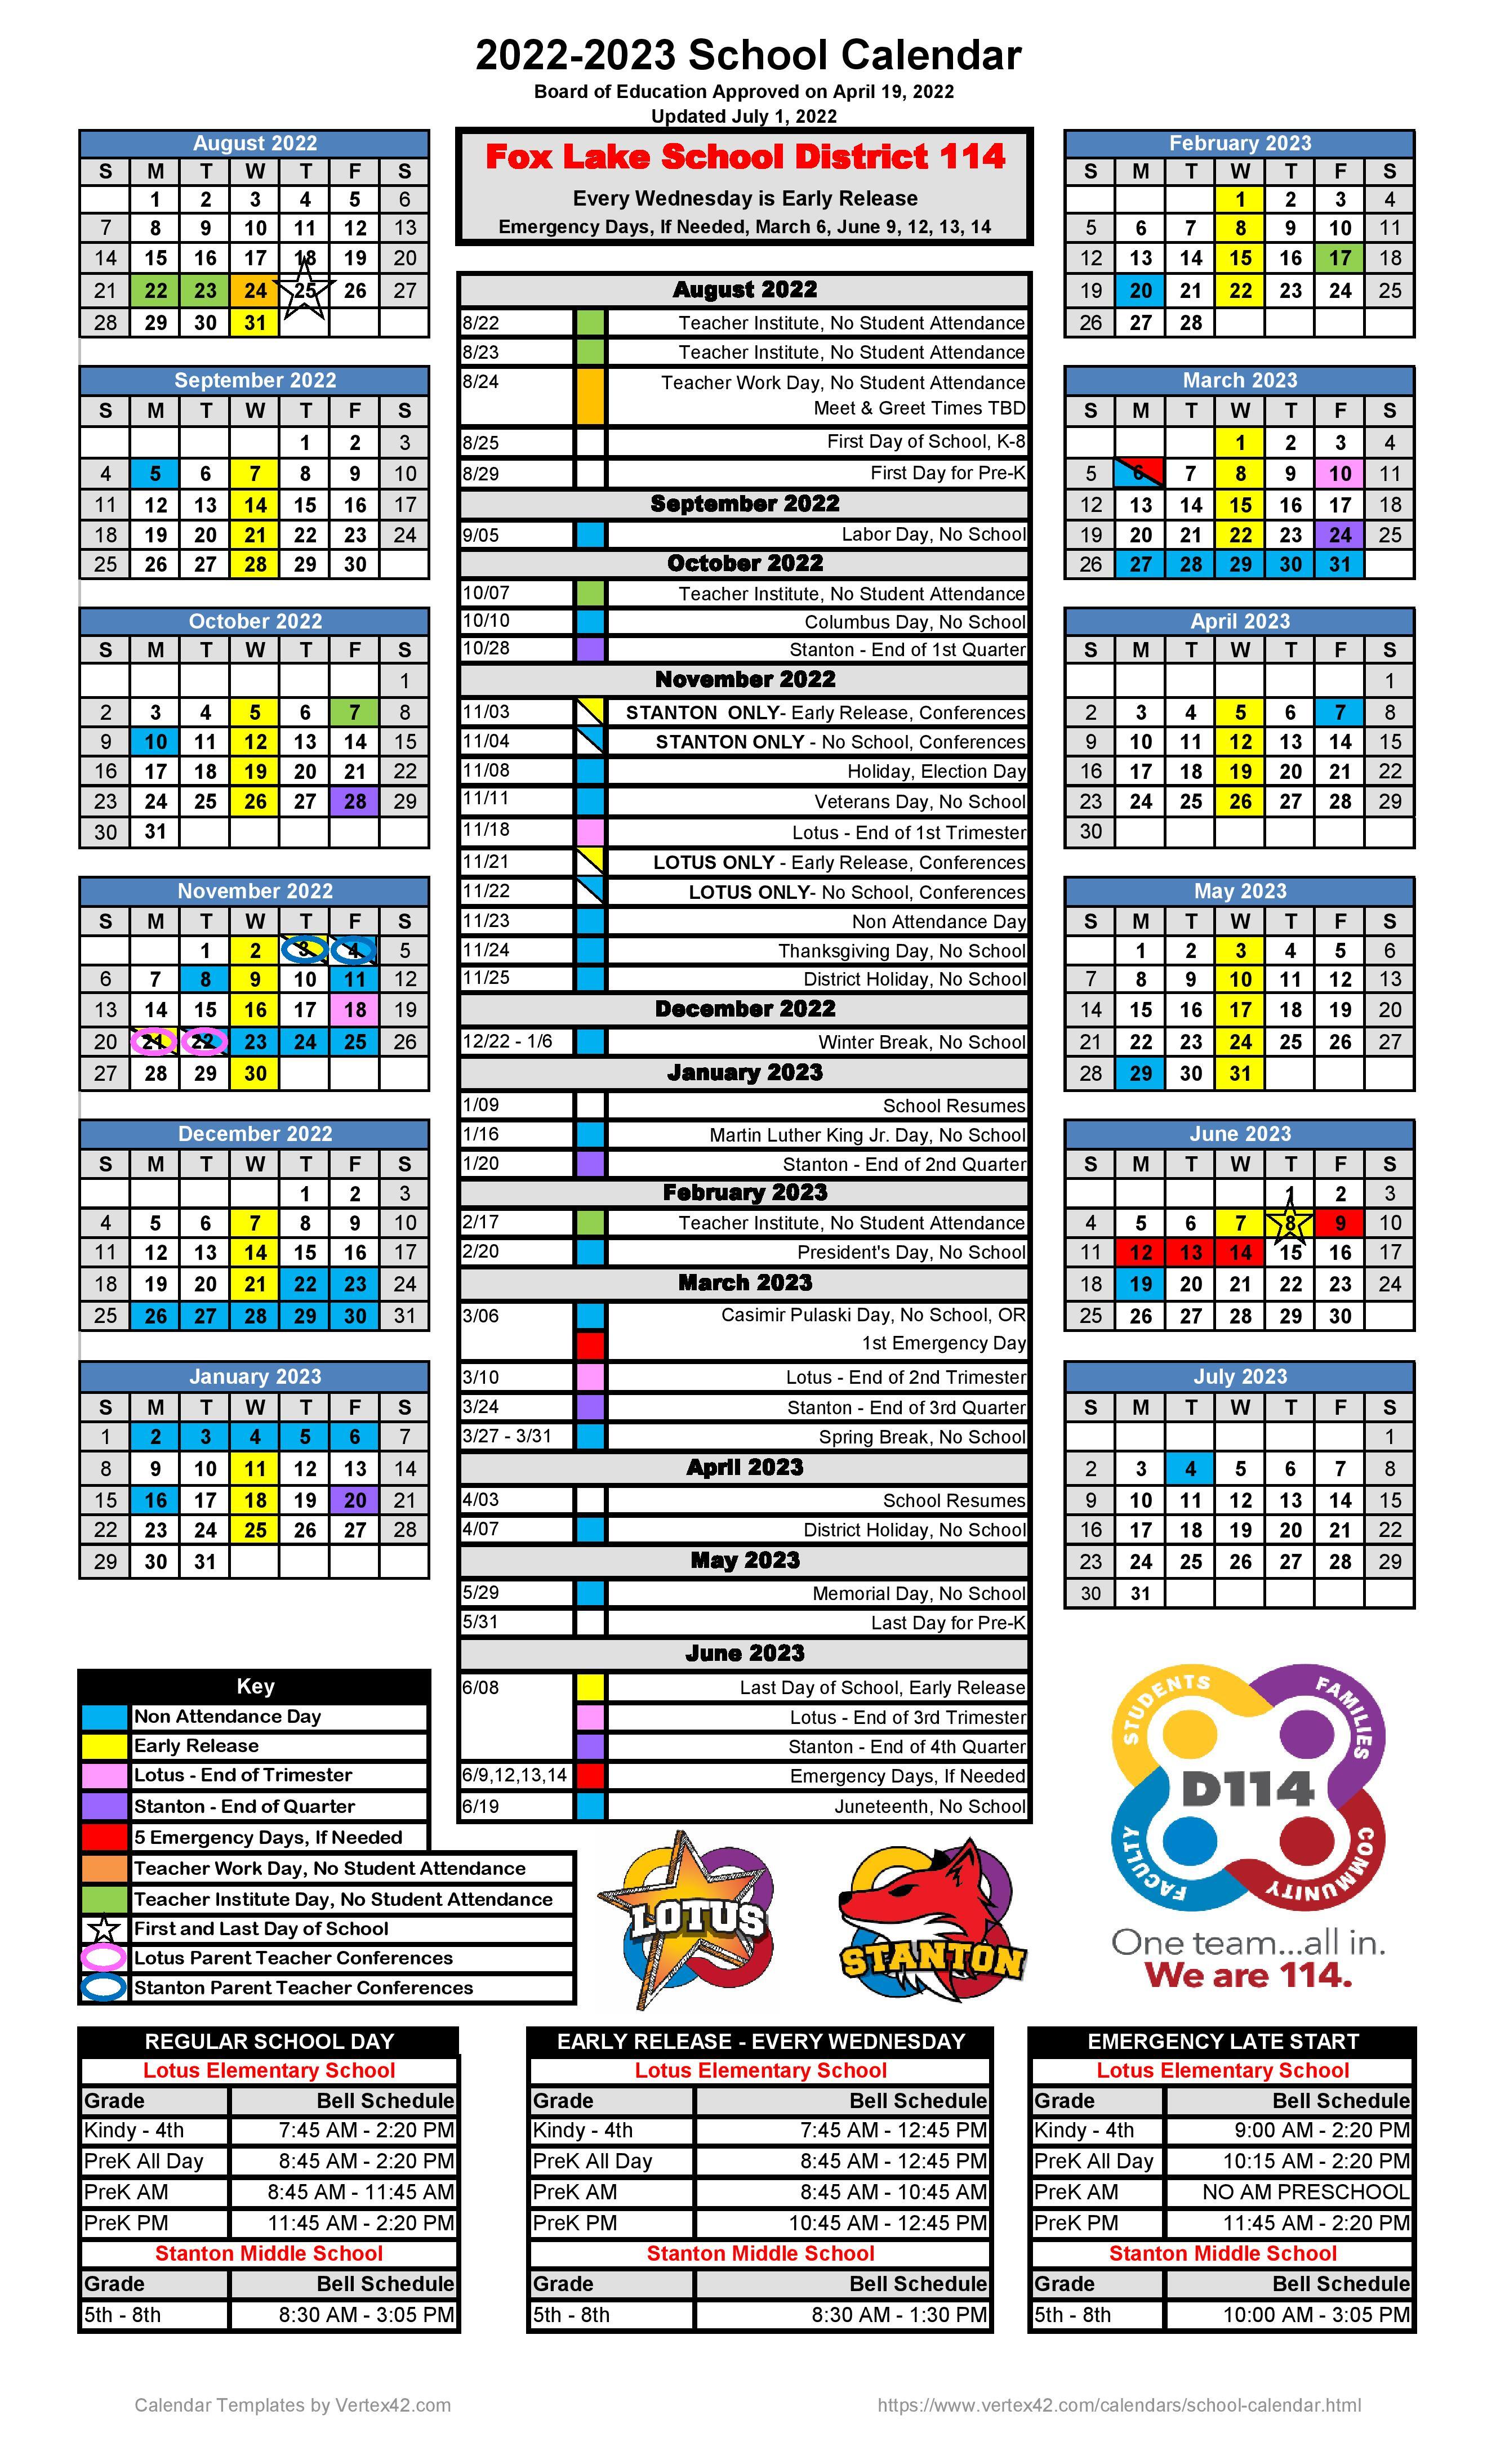 District Calendar Fox Lake Grade School District 114